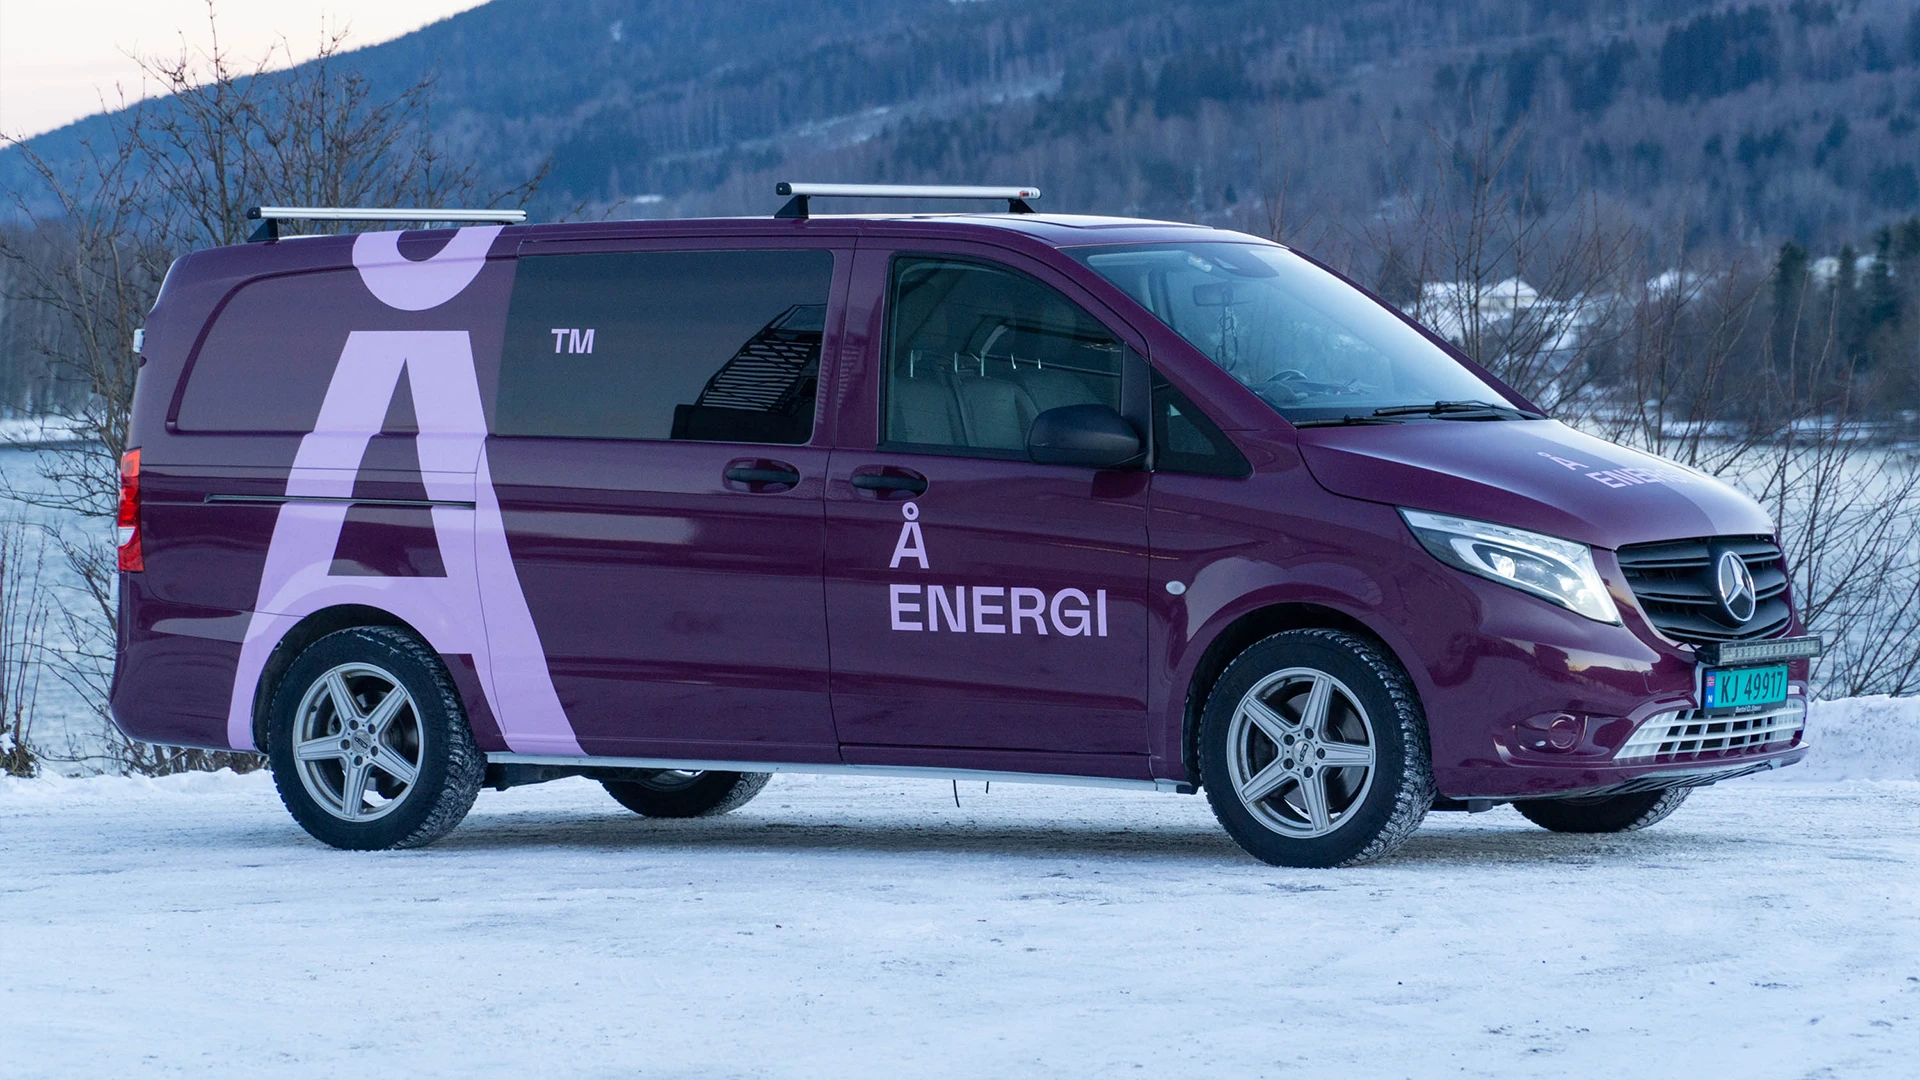 Vito varebil helfoliering å energi